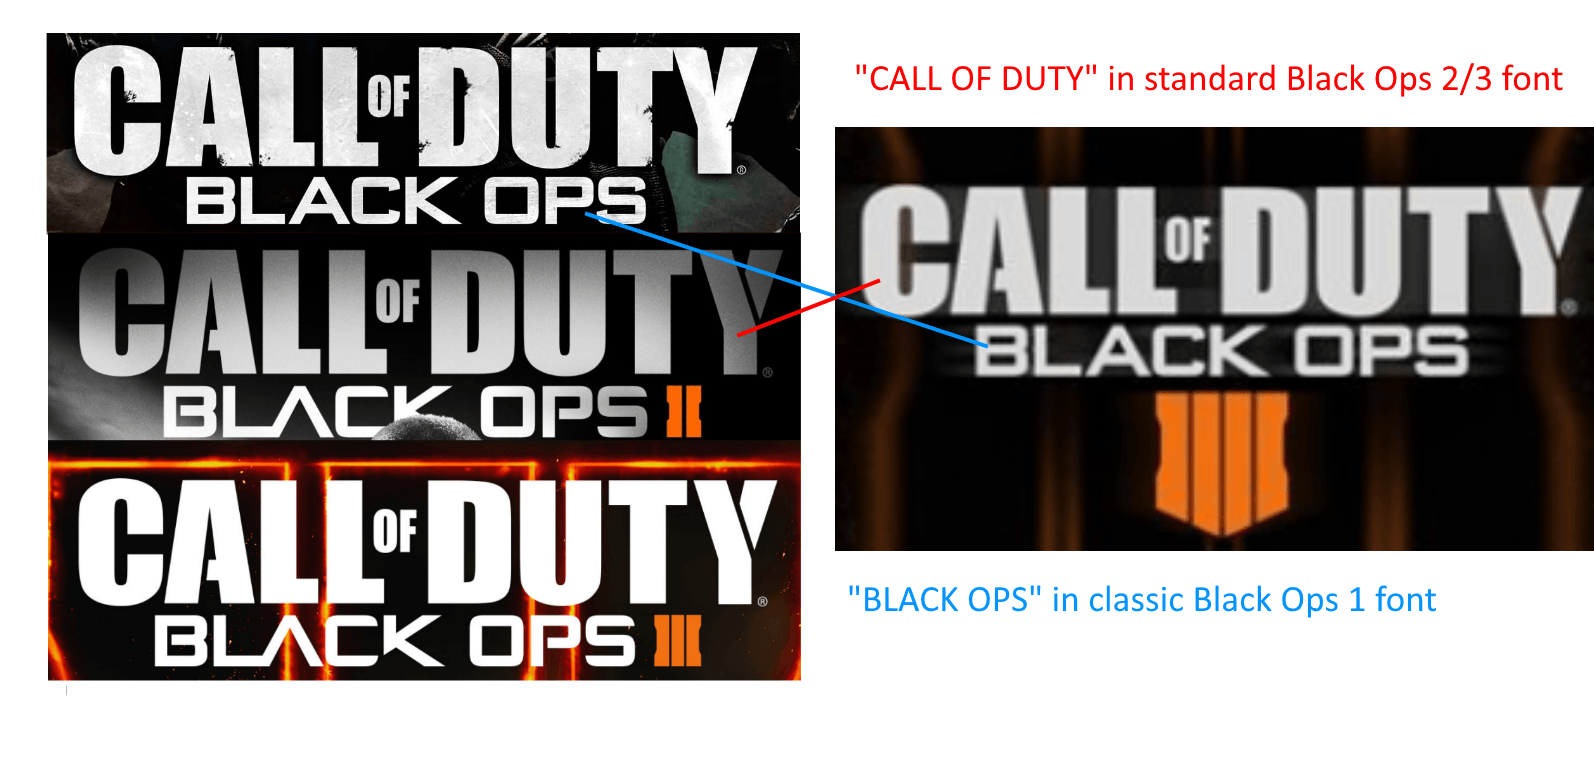 BO1 Logo - Black Ops 4's font is more similar to the original Black Ops font